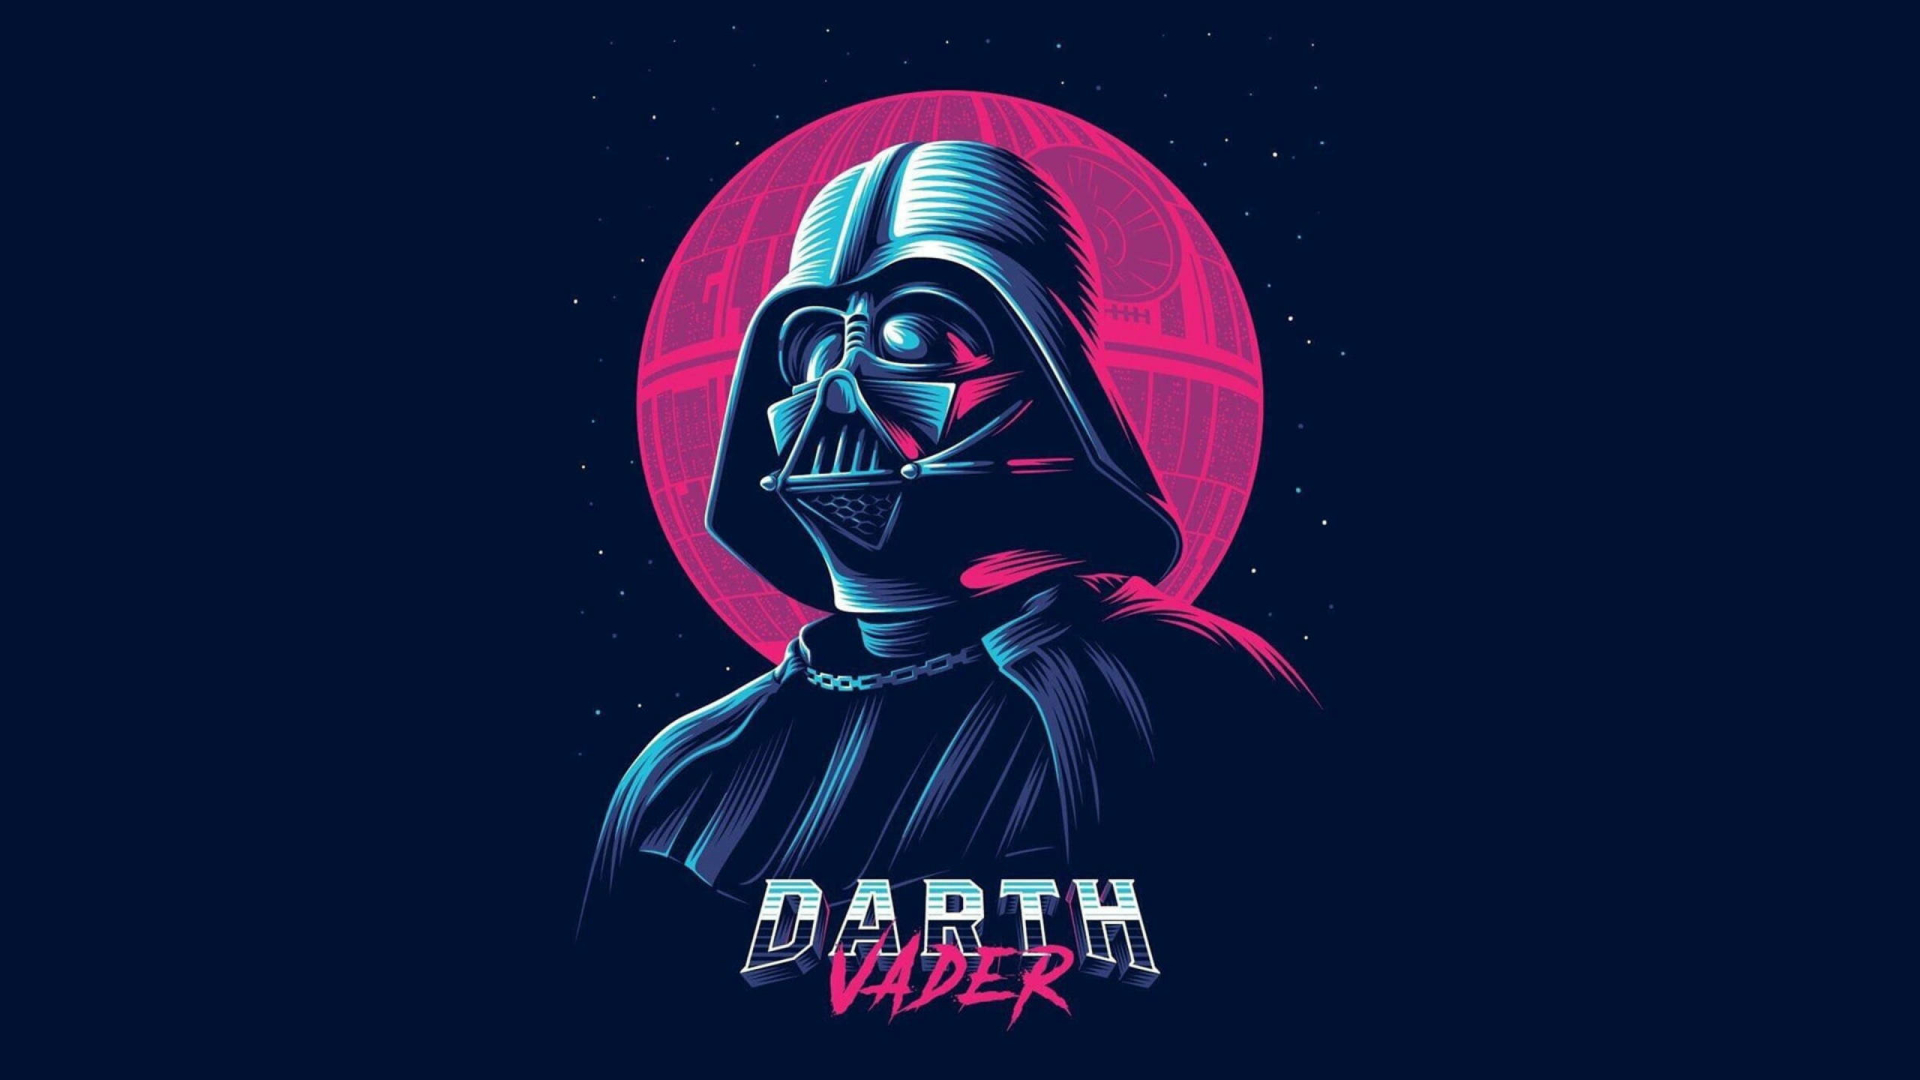 Download Star Wars: Darth Vader wallpaper for mobile phone, free Star Wars: Darth Vader HD picture